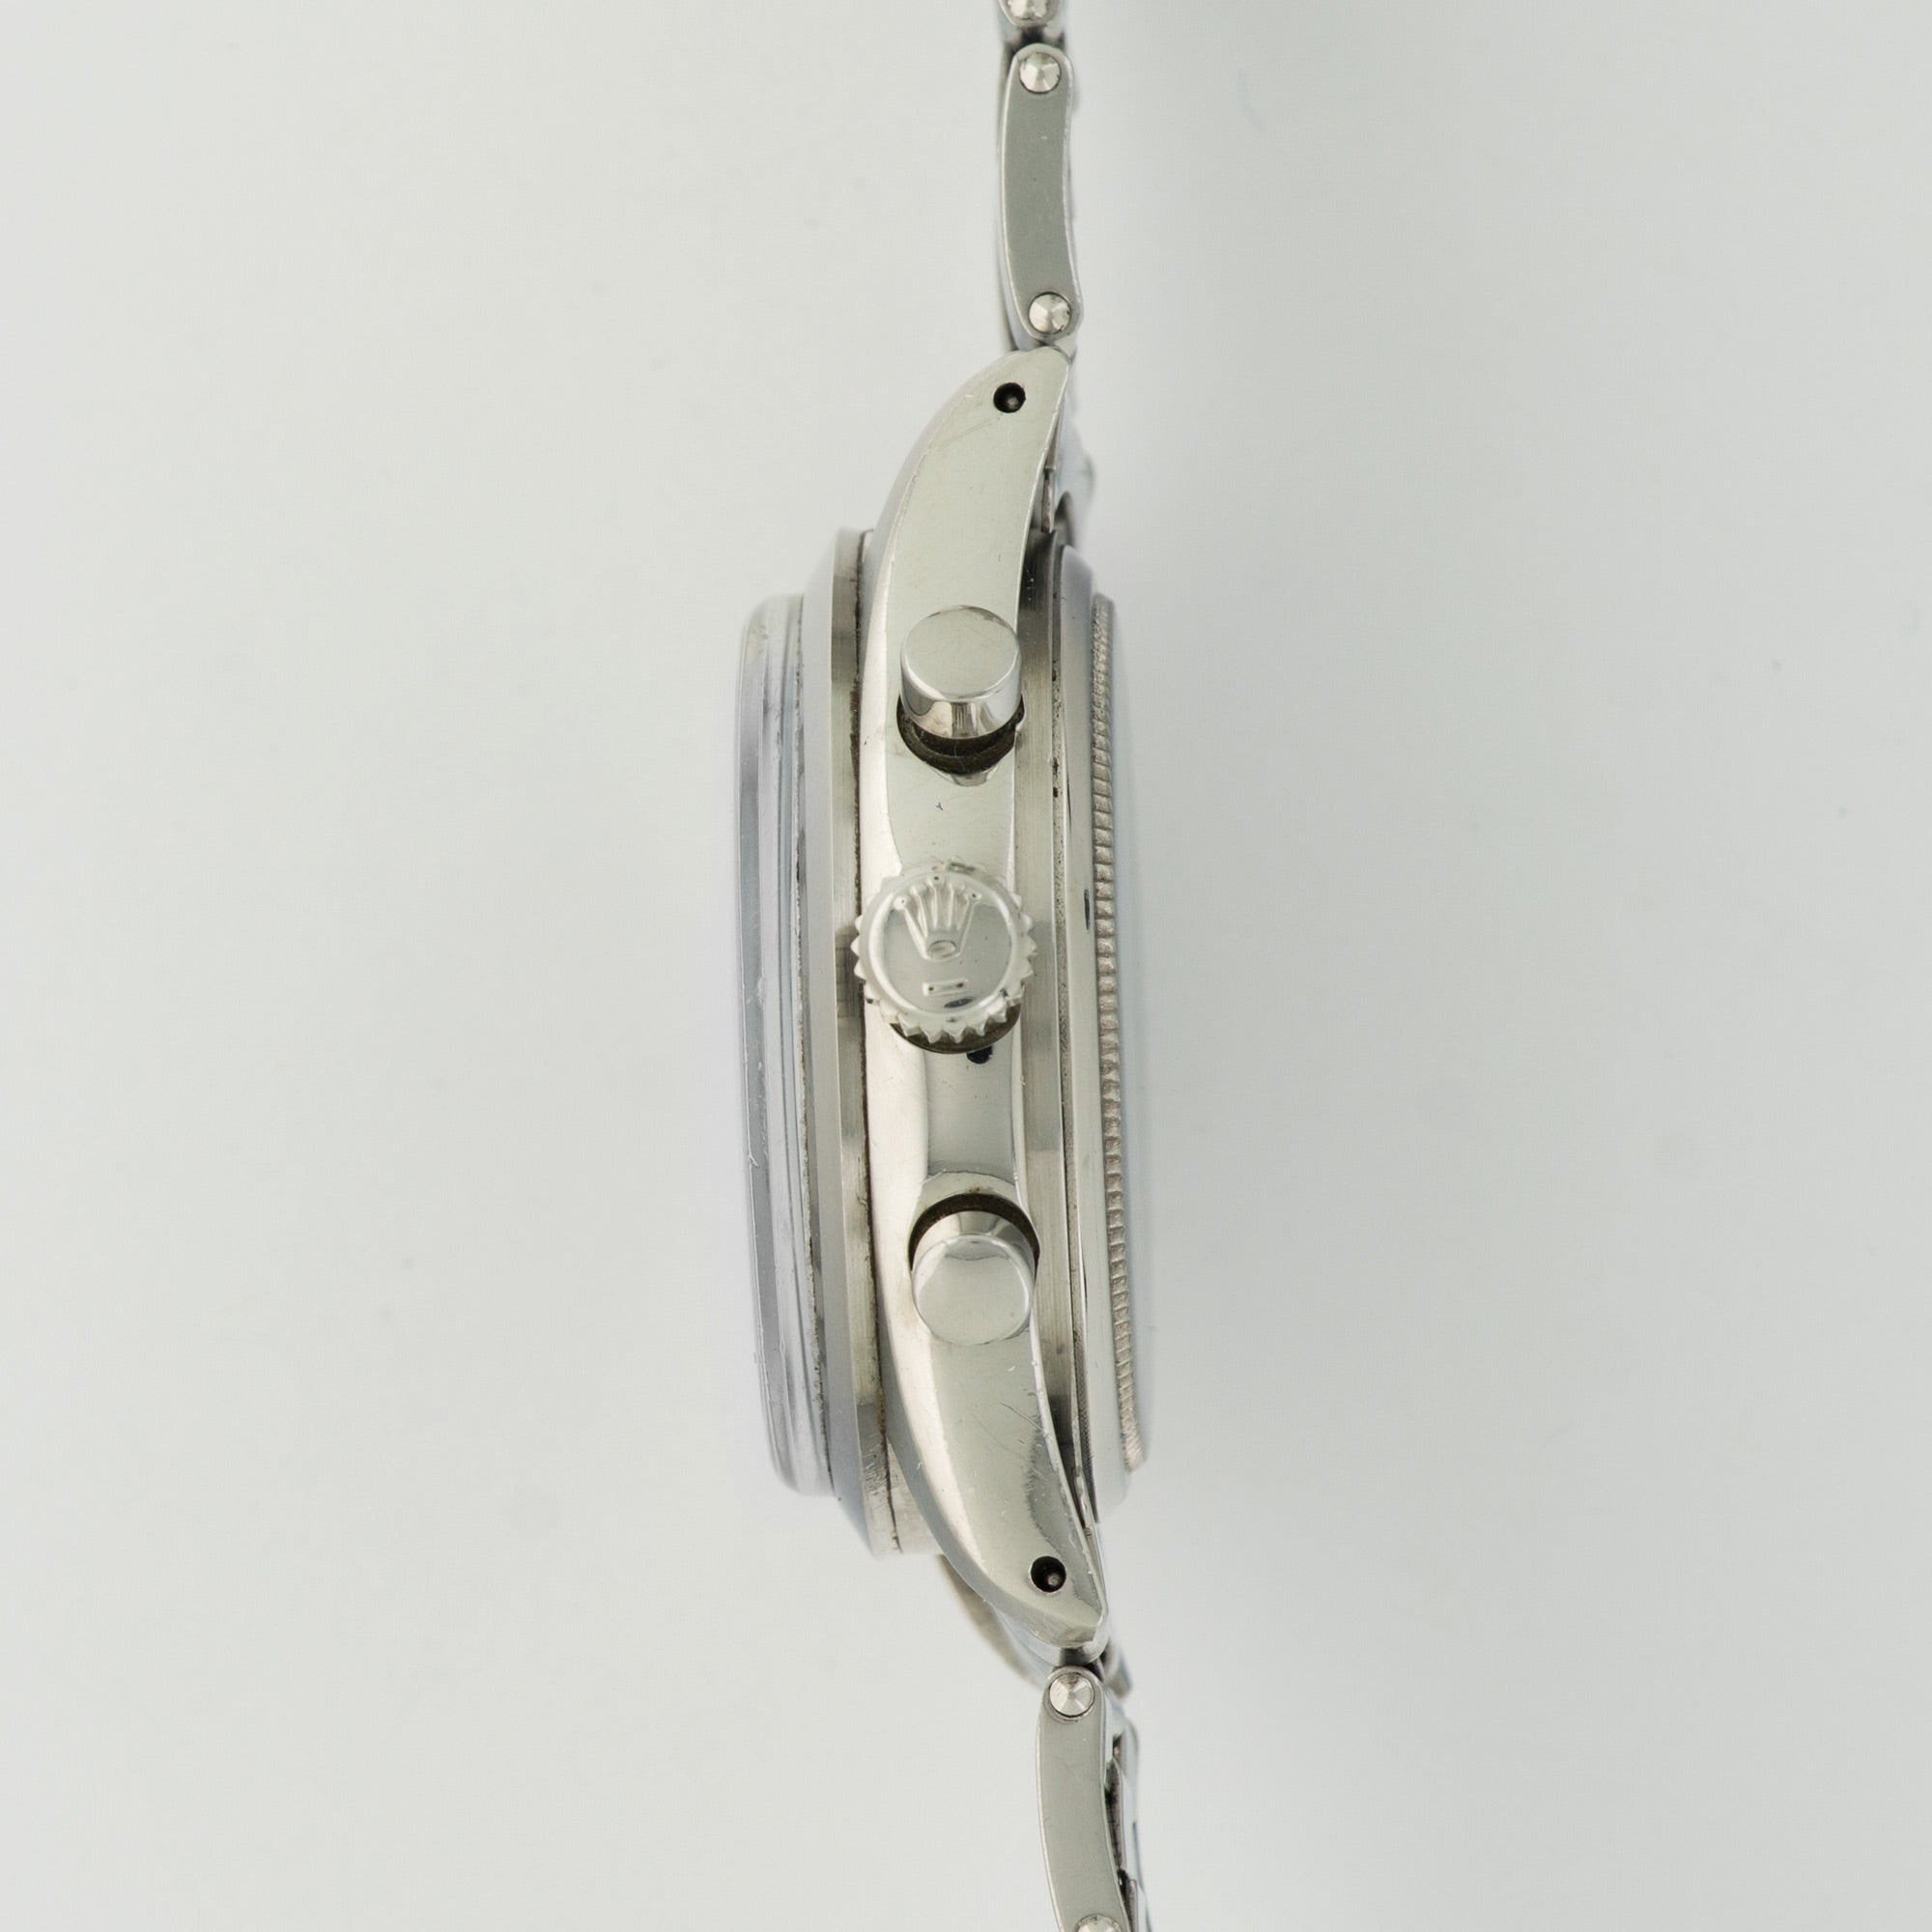 Rolex - Vintage Rolex Chronograph Pre-Daytona Watch Ref. 6238 - The Keystone Watches